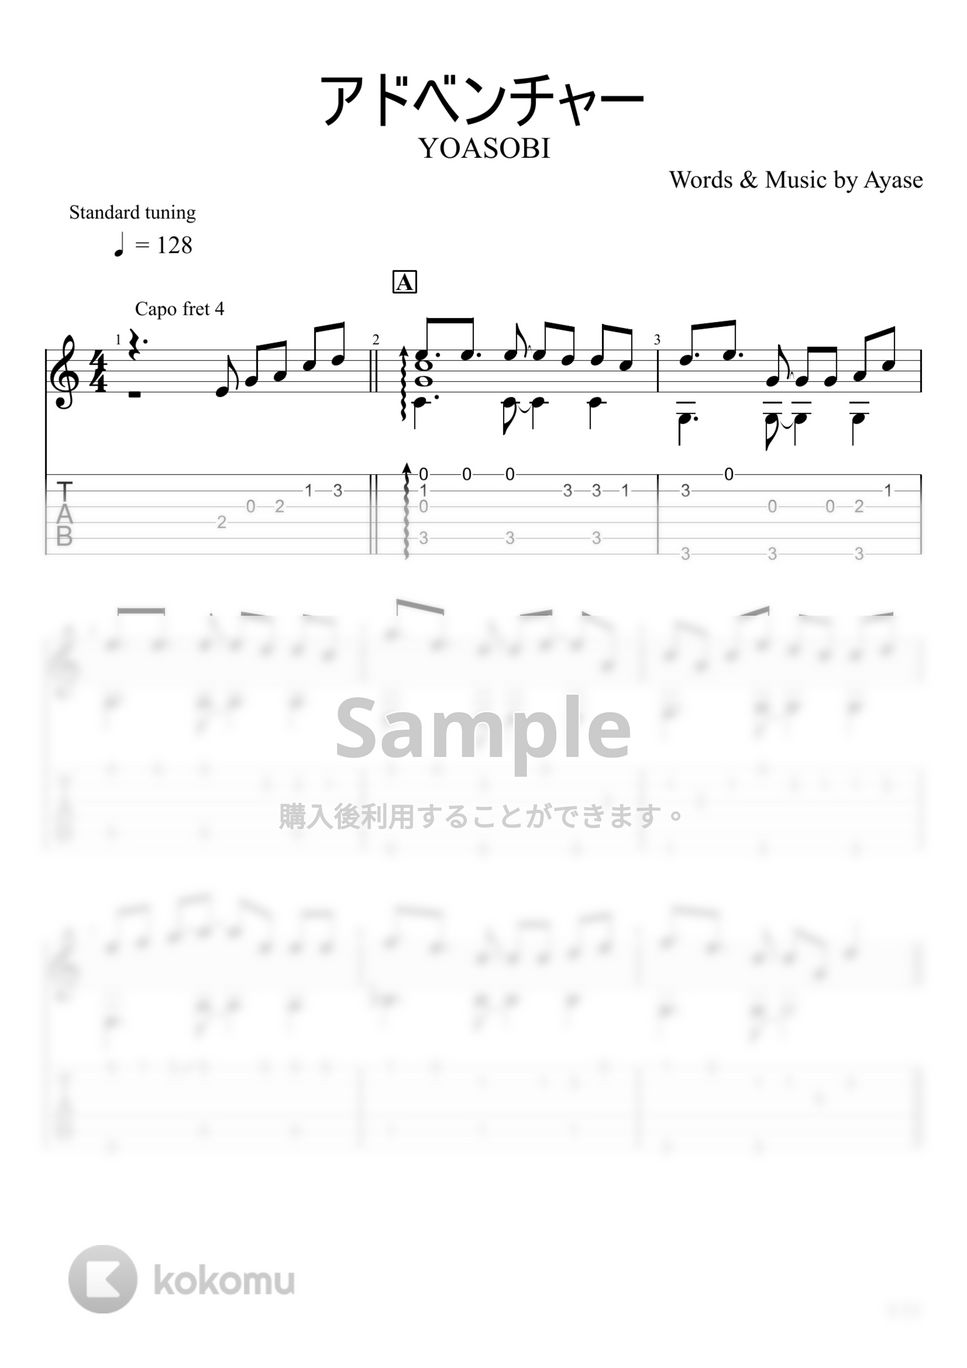 YOASOBI - アドベンチャー (ソロギター) by u3danchou